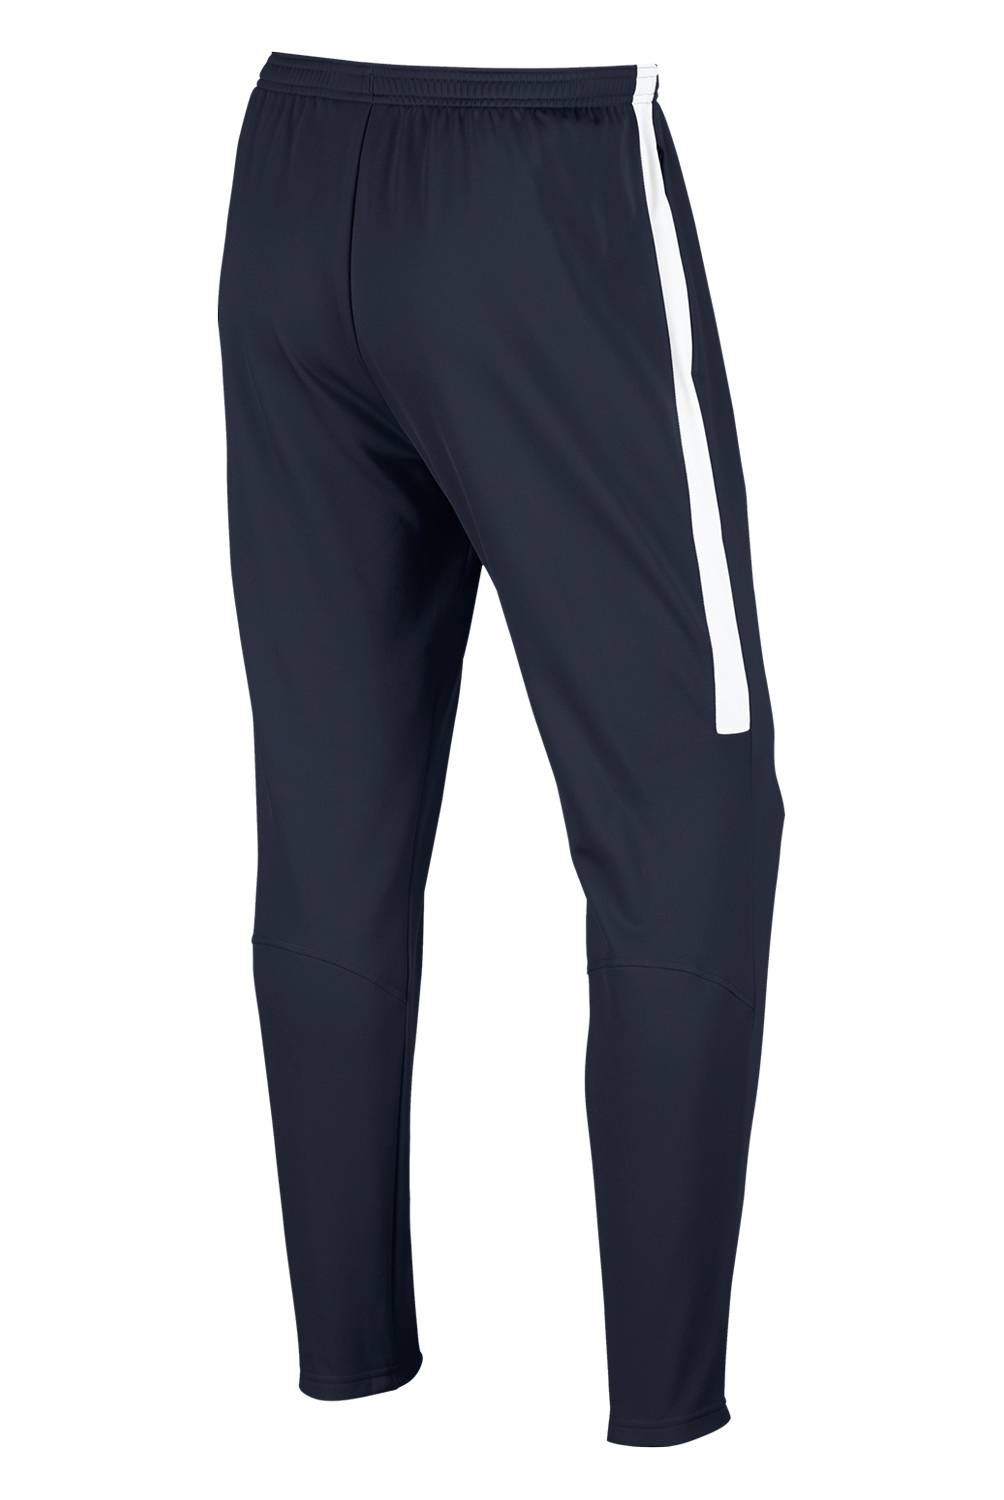 Nike - Pantalón Hombre Dry Academy